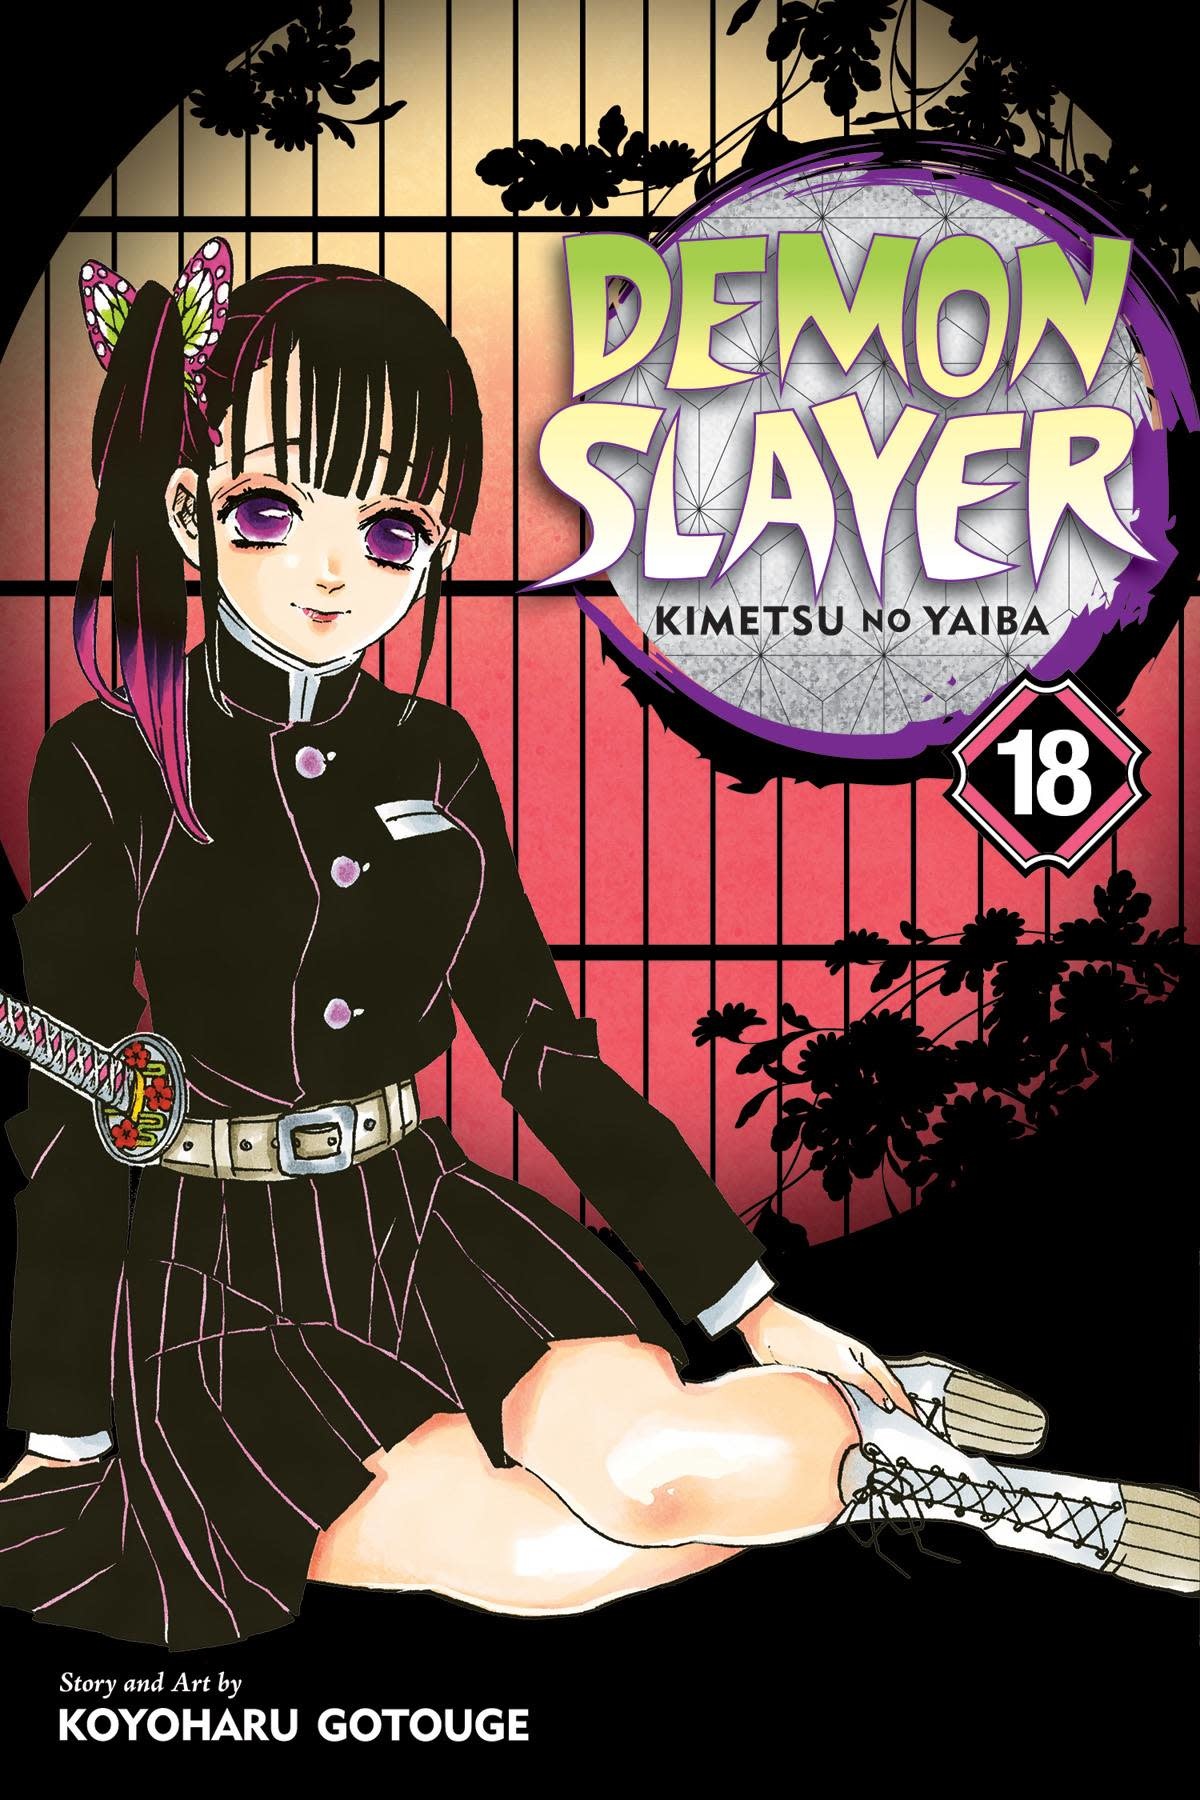 VIZ  See The Art of Demon Slayer: Kimetsu no Yaiba the Anime